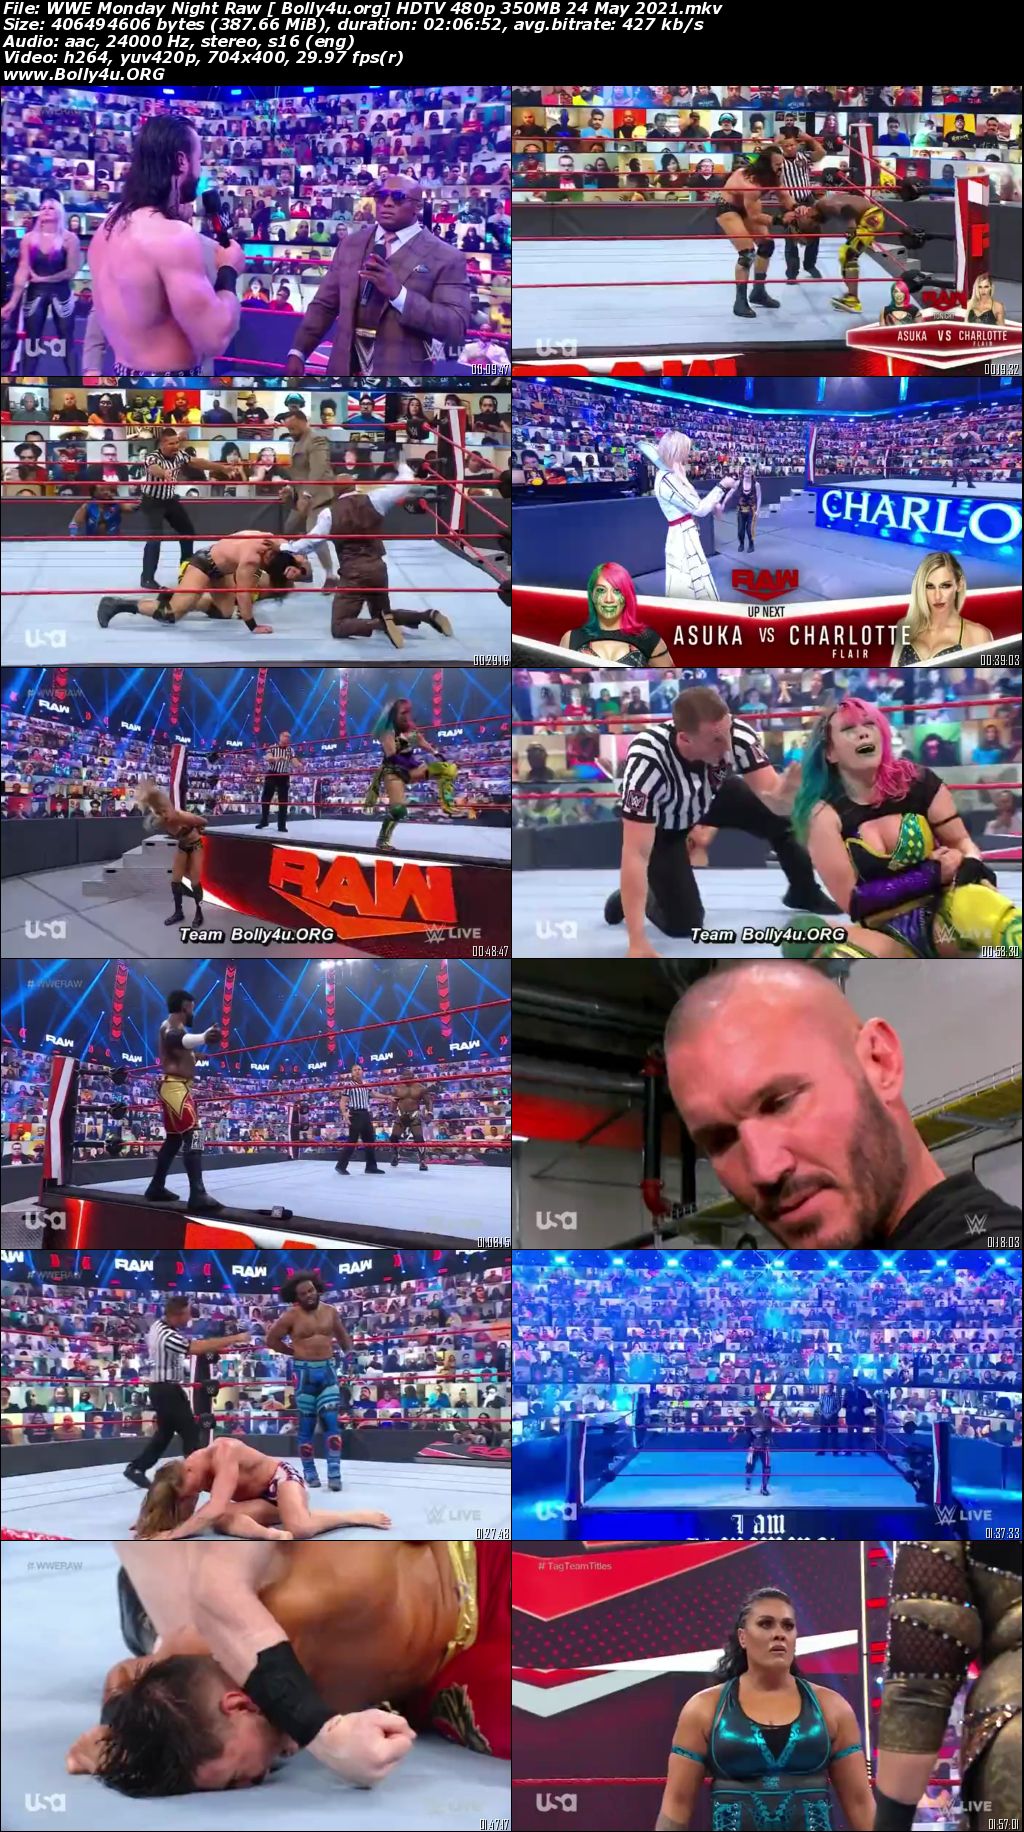 WWE Monday Night Raw HDTV 480p 350MB 24 May 2021 Download